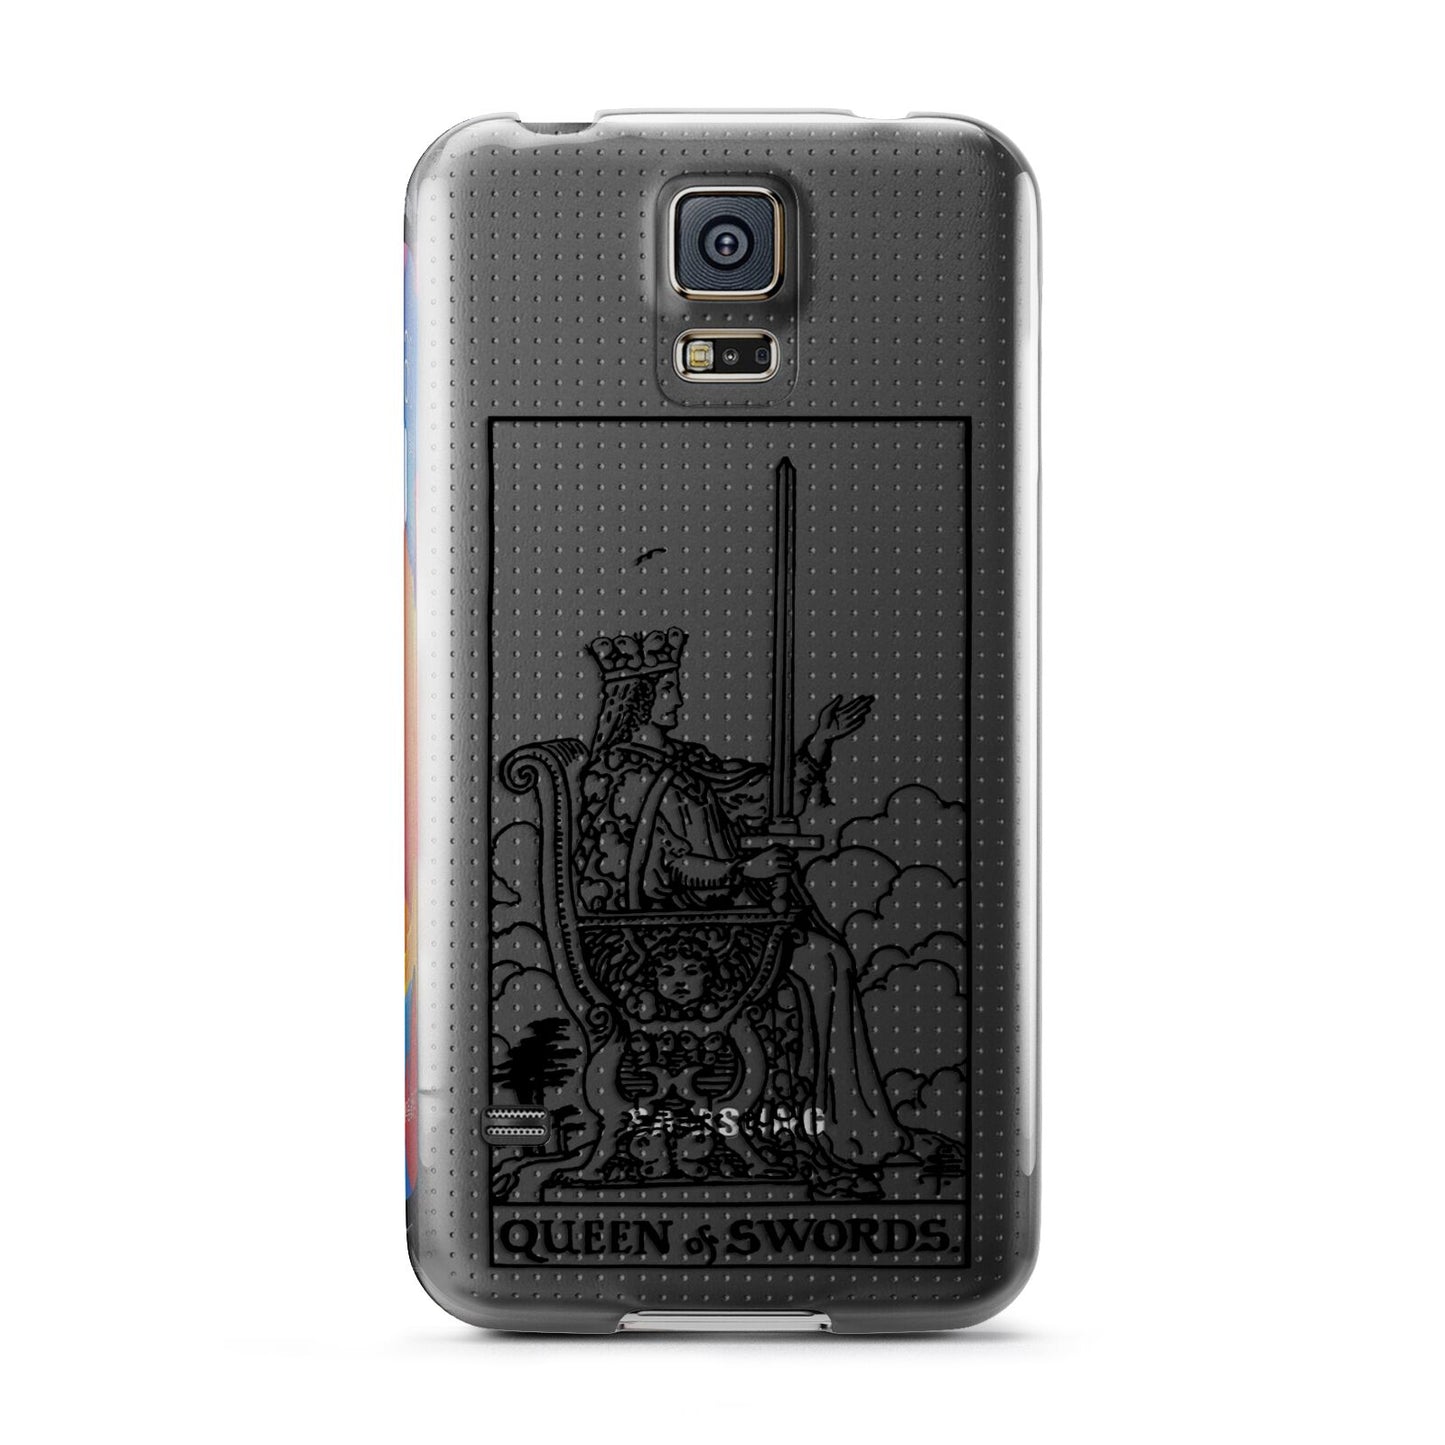 Queen of Swords Monochrome Samsung Galaxy S5 Case